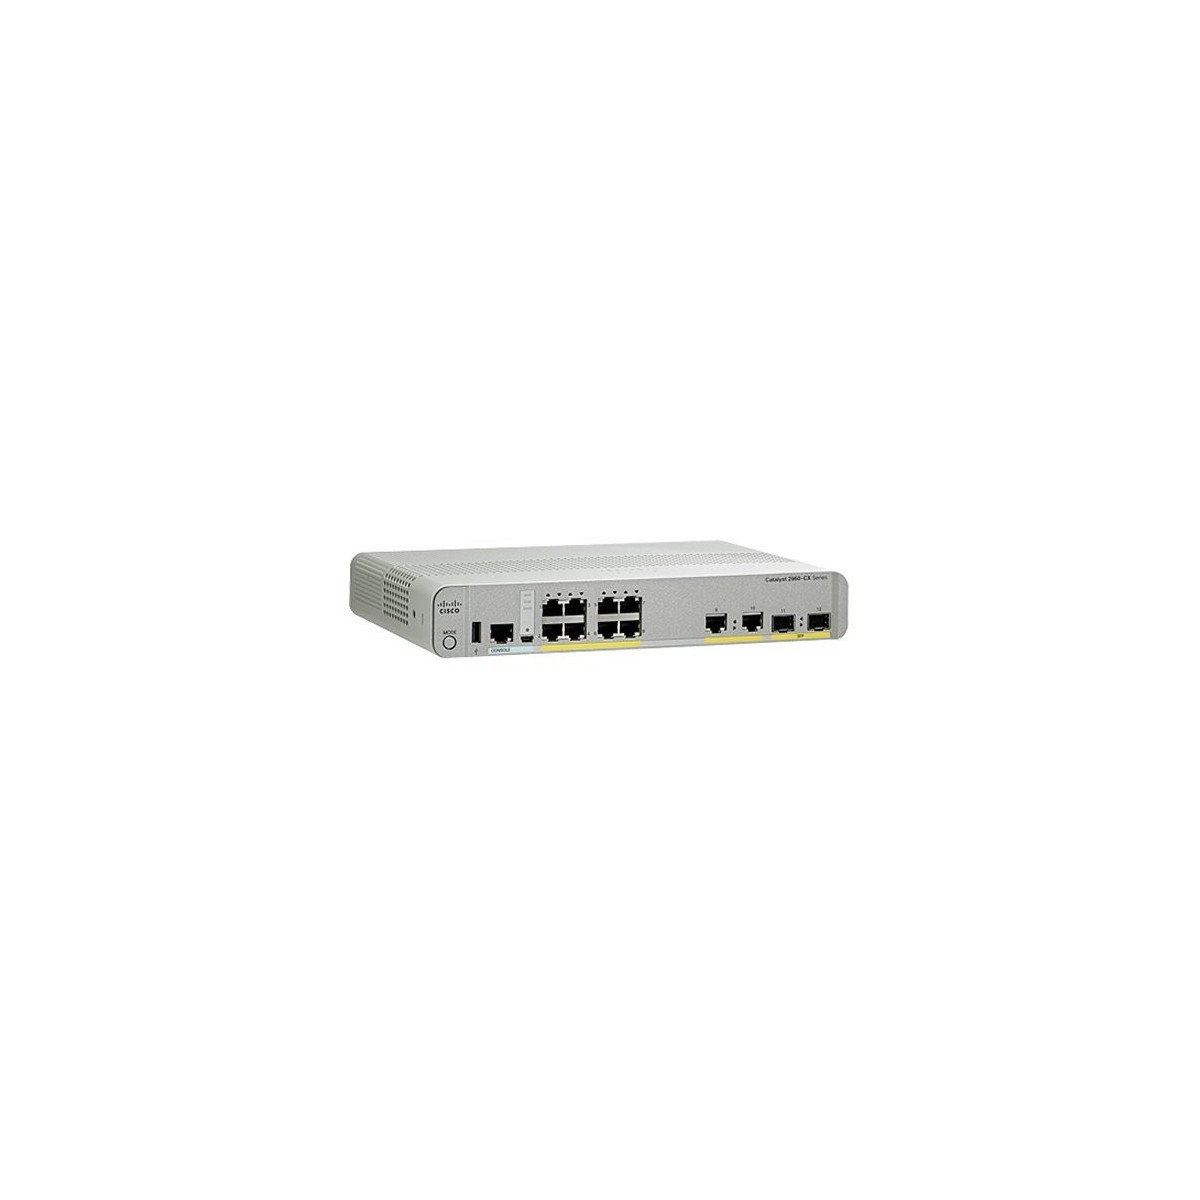 Cisco 2960-CX - Managed - L2/L3 - Gigabit Ethernet (10/100/1000) - Full duplex - Power over Ethernet (PoE)